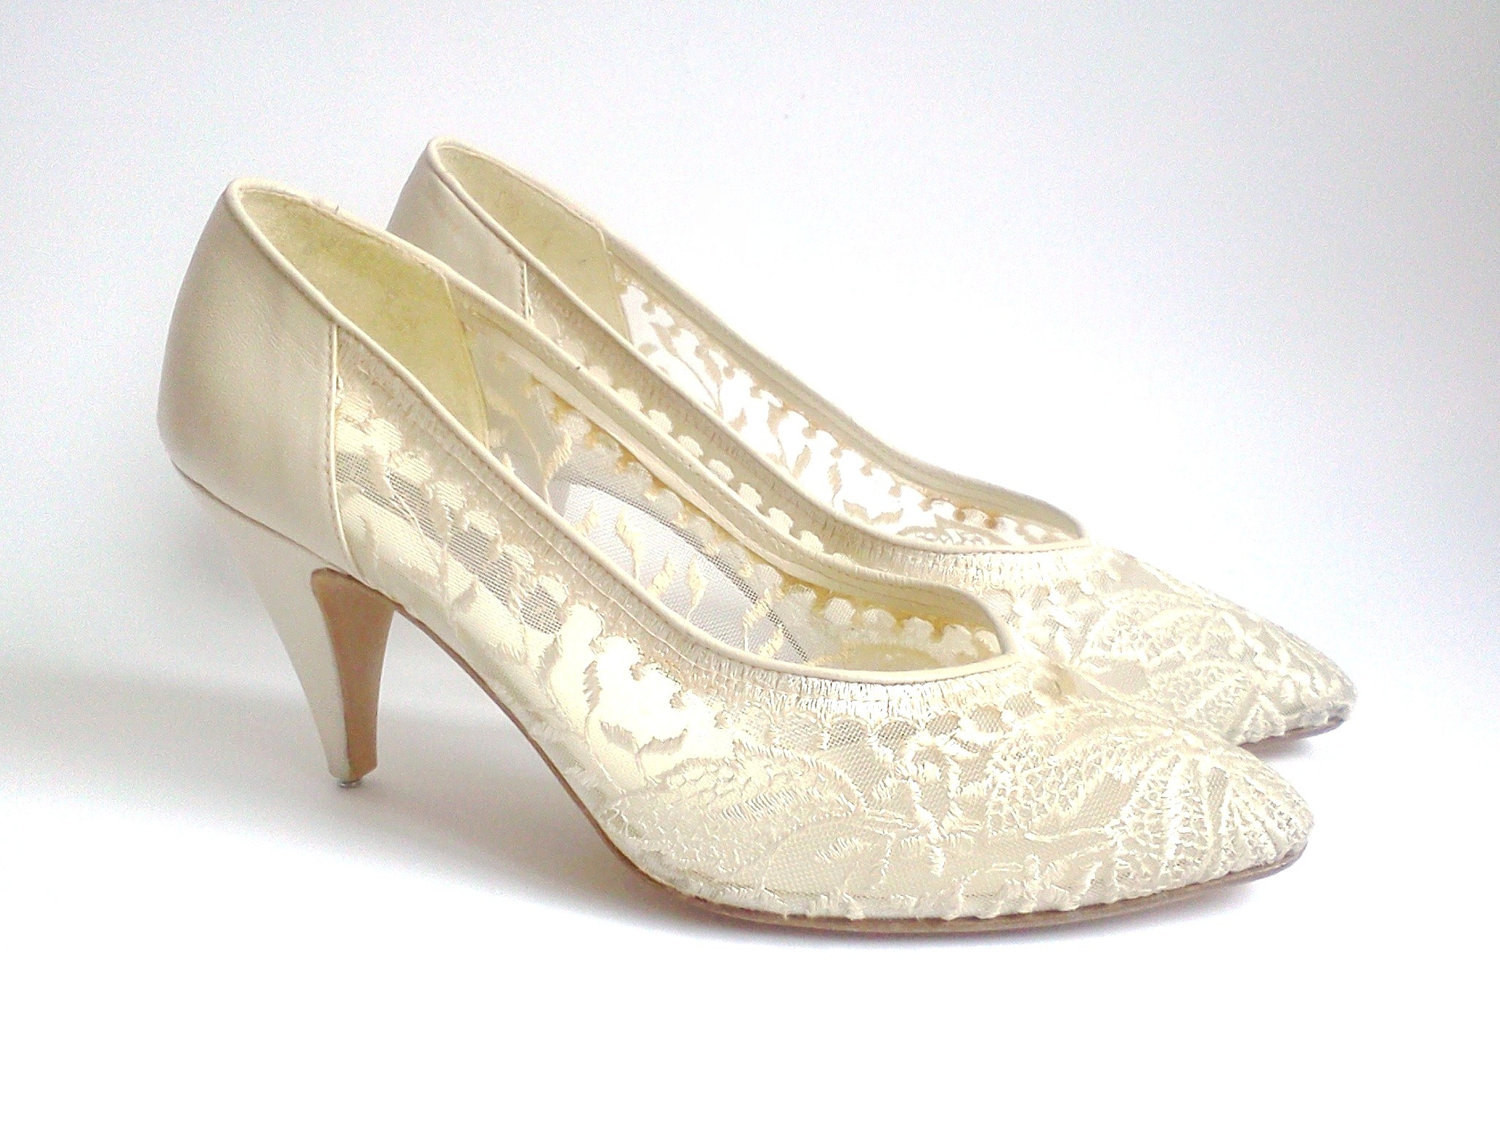 Vintage Lace Wedding Shoes
 Vintage Wedding Shoes Roland Cartier Beige Lace and Leather